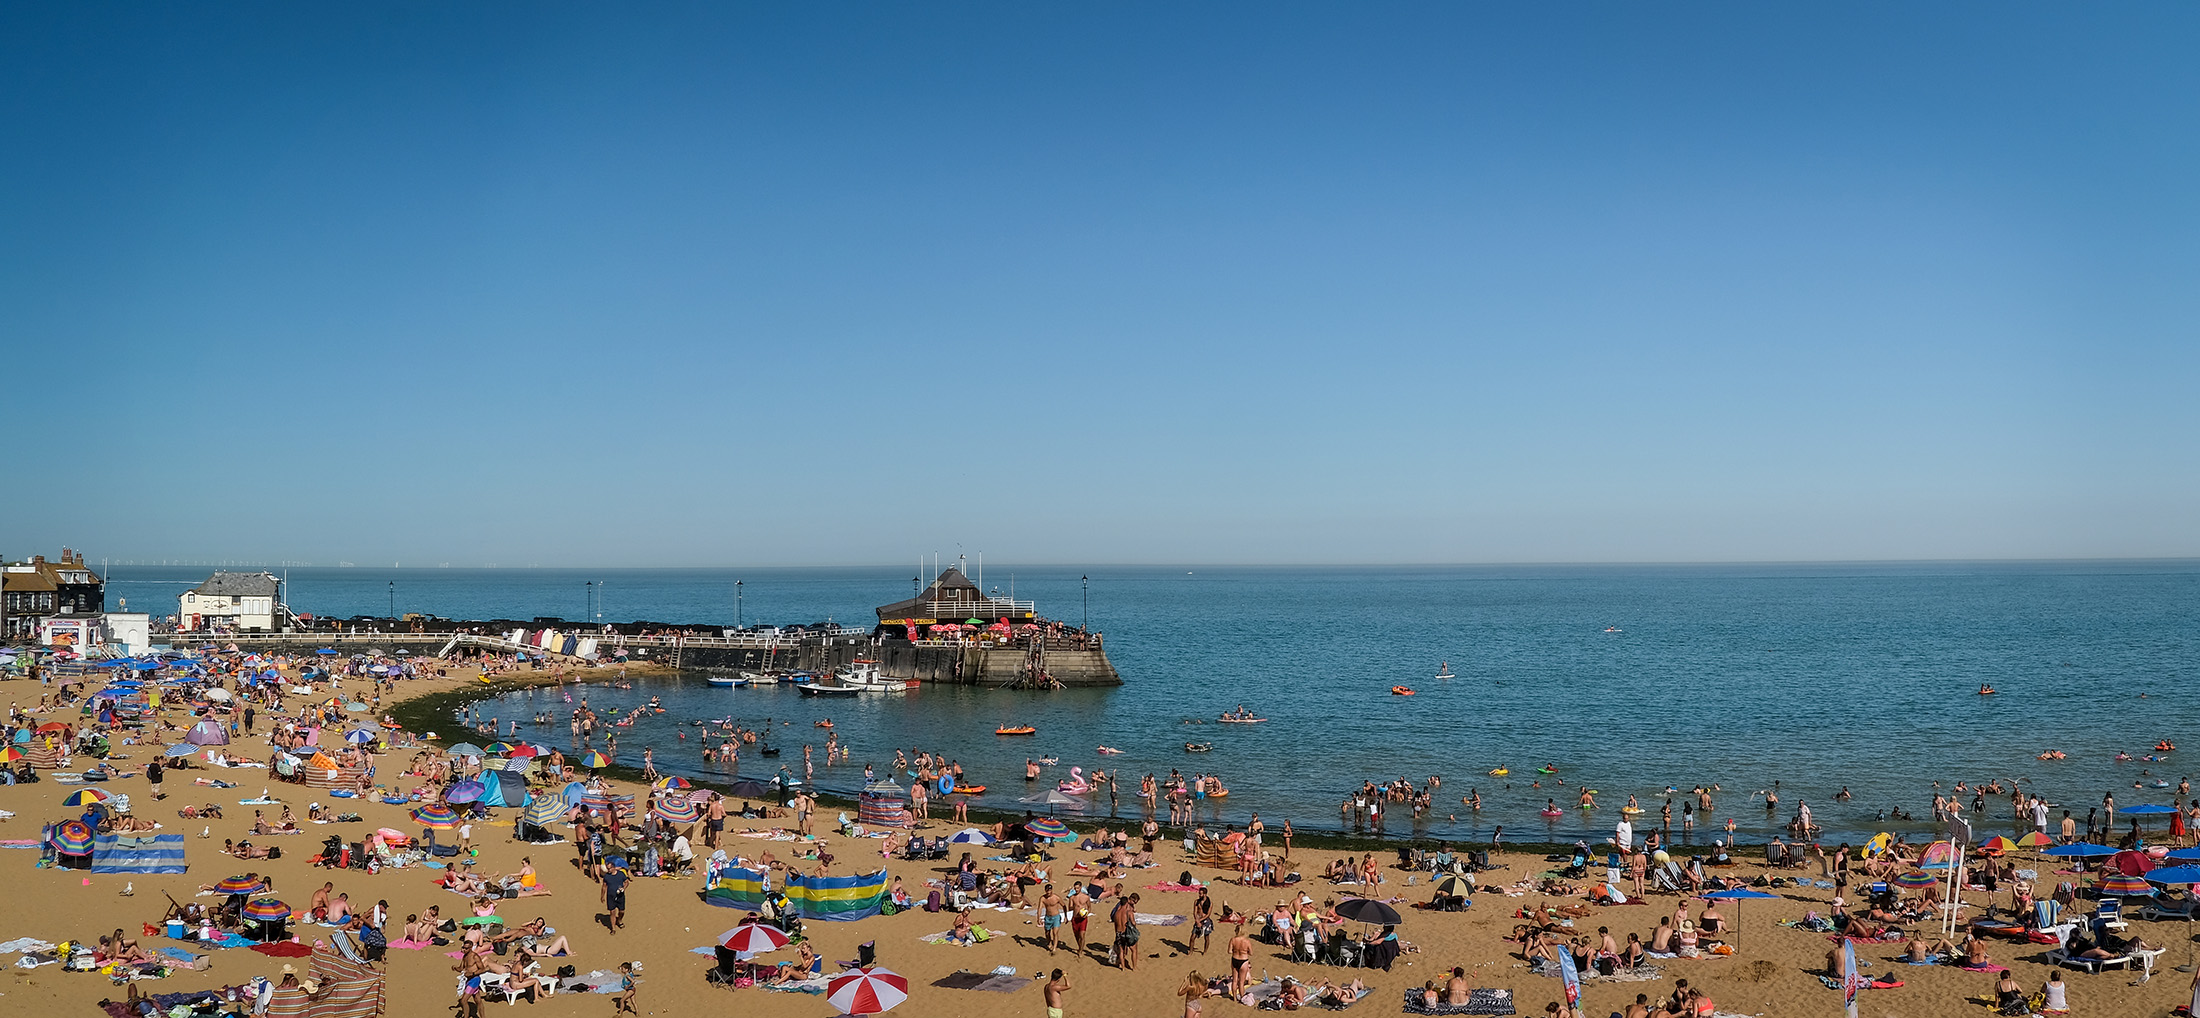 crowded beach panorama